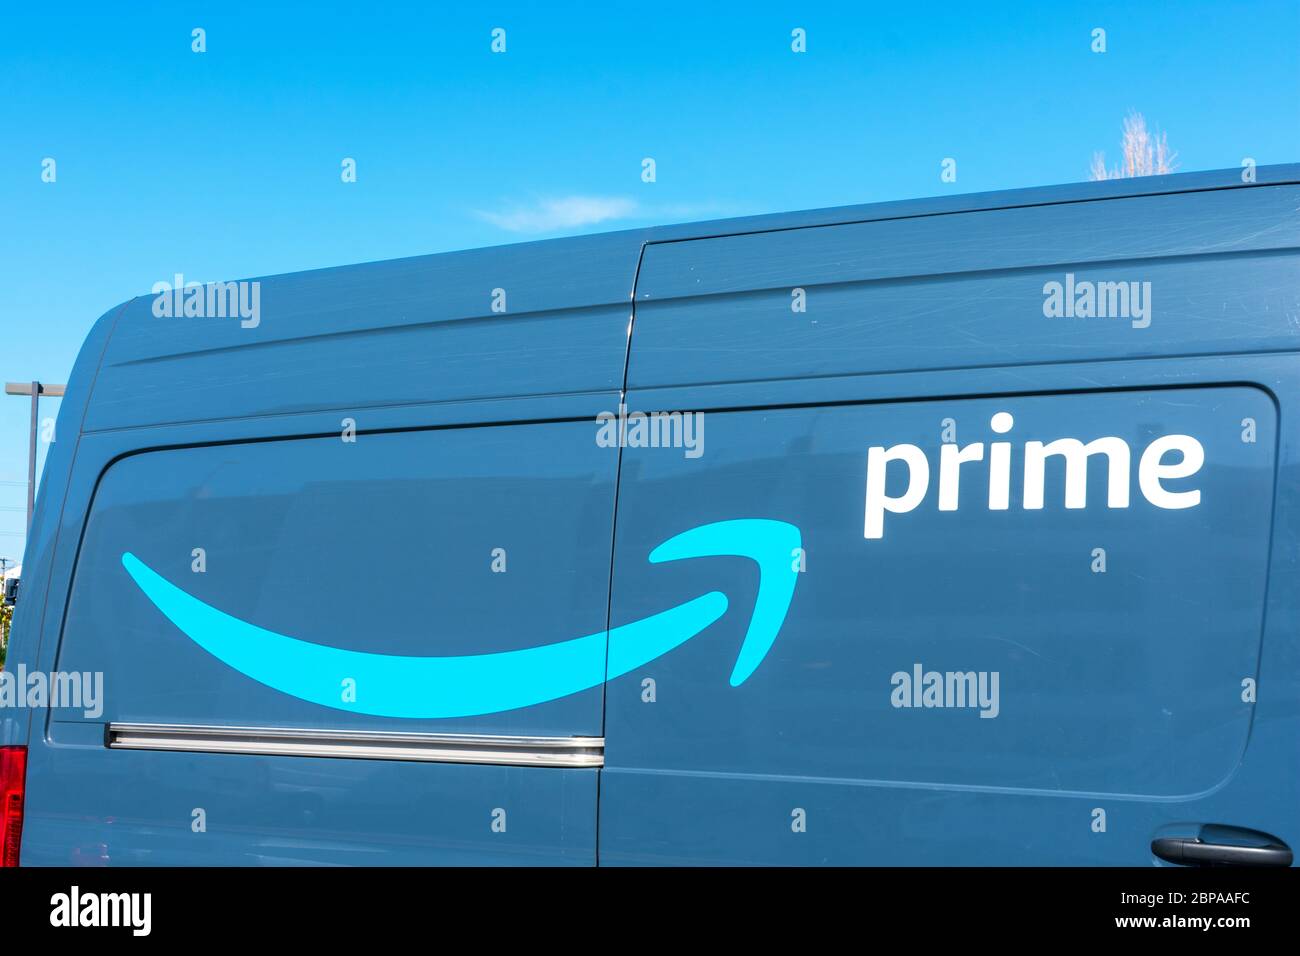 Closeup. Amazon Prime logo on Amazon.com branded minivan. Amazon Prime is a paid subscription service - San Jose, California, USA - 2020 Stock Photo